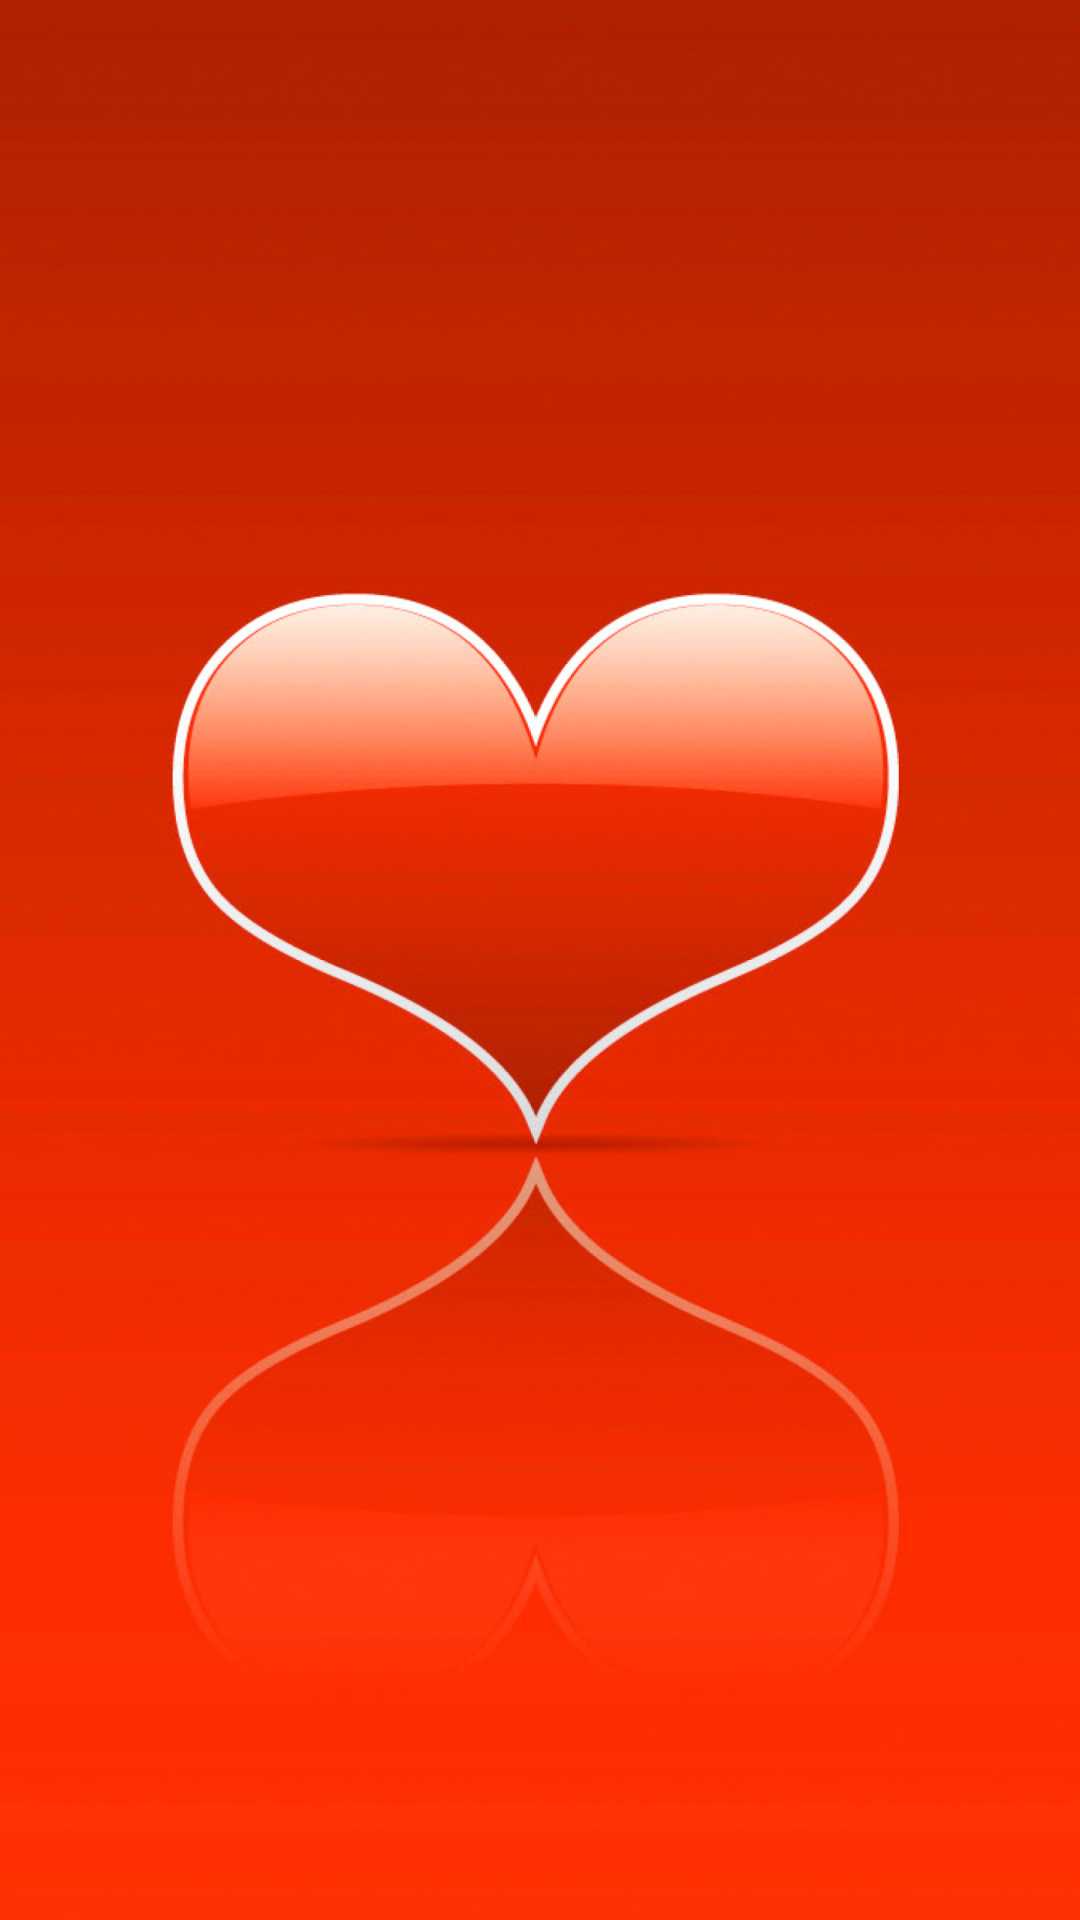 1080p Red Heart Wallpaper 1